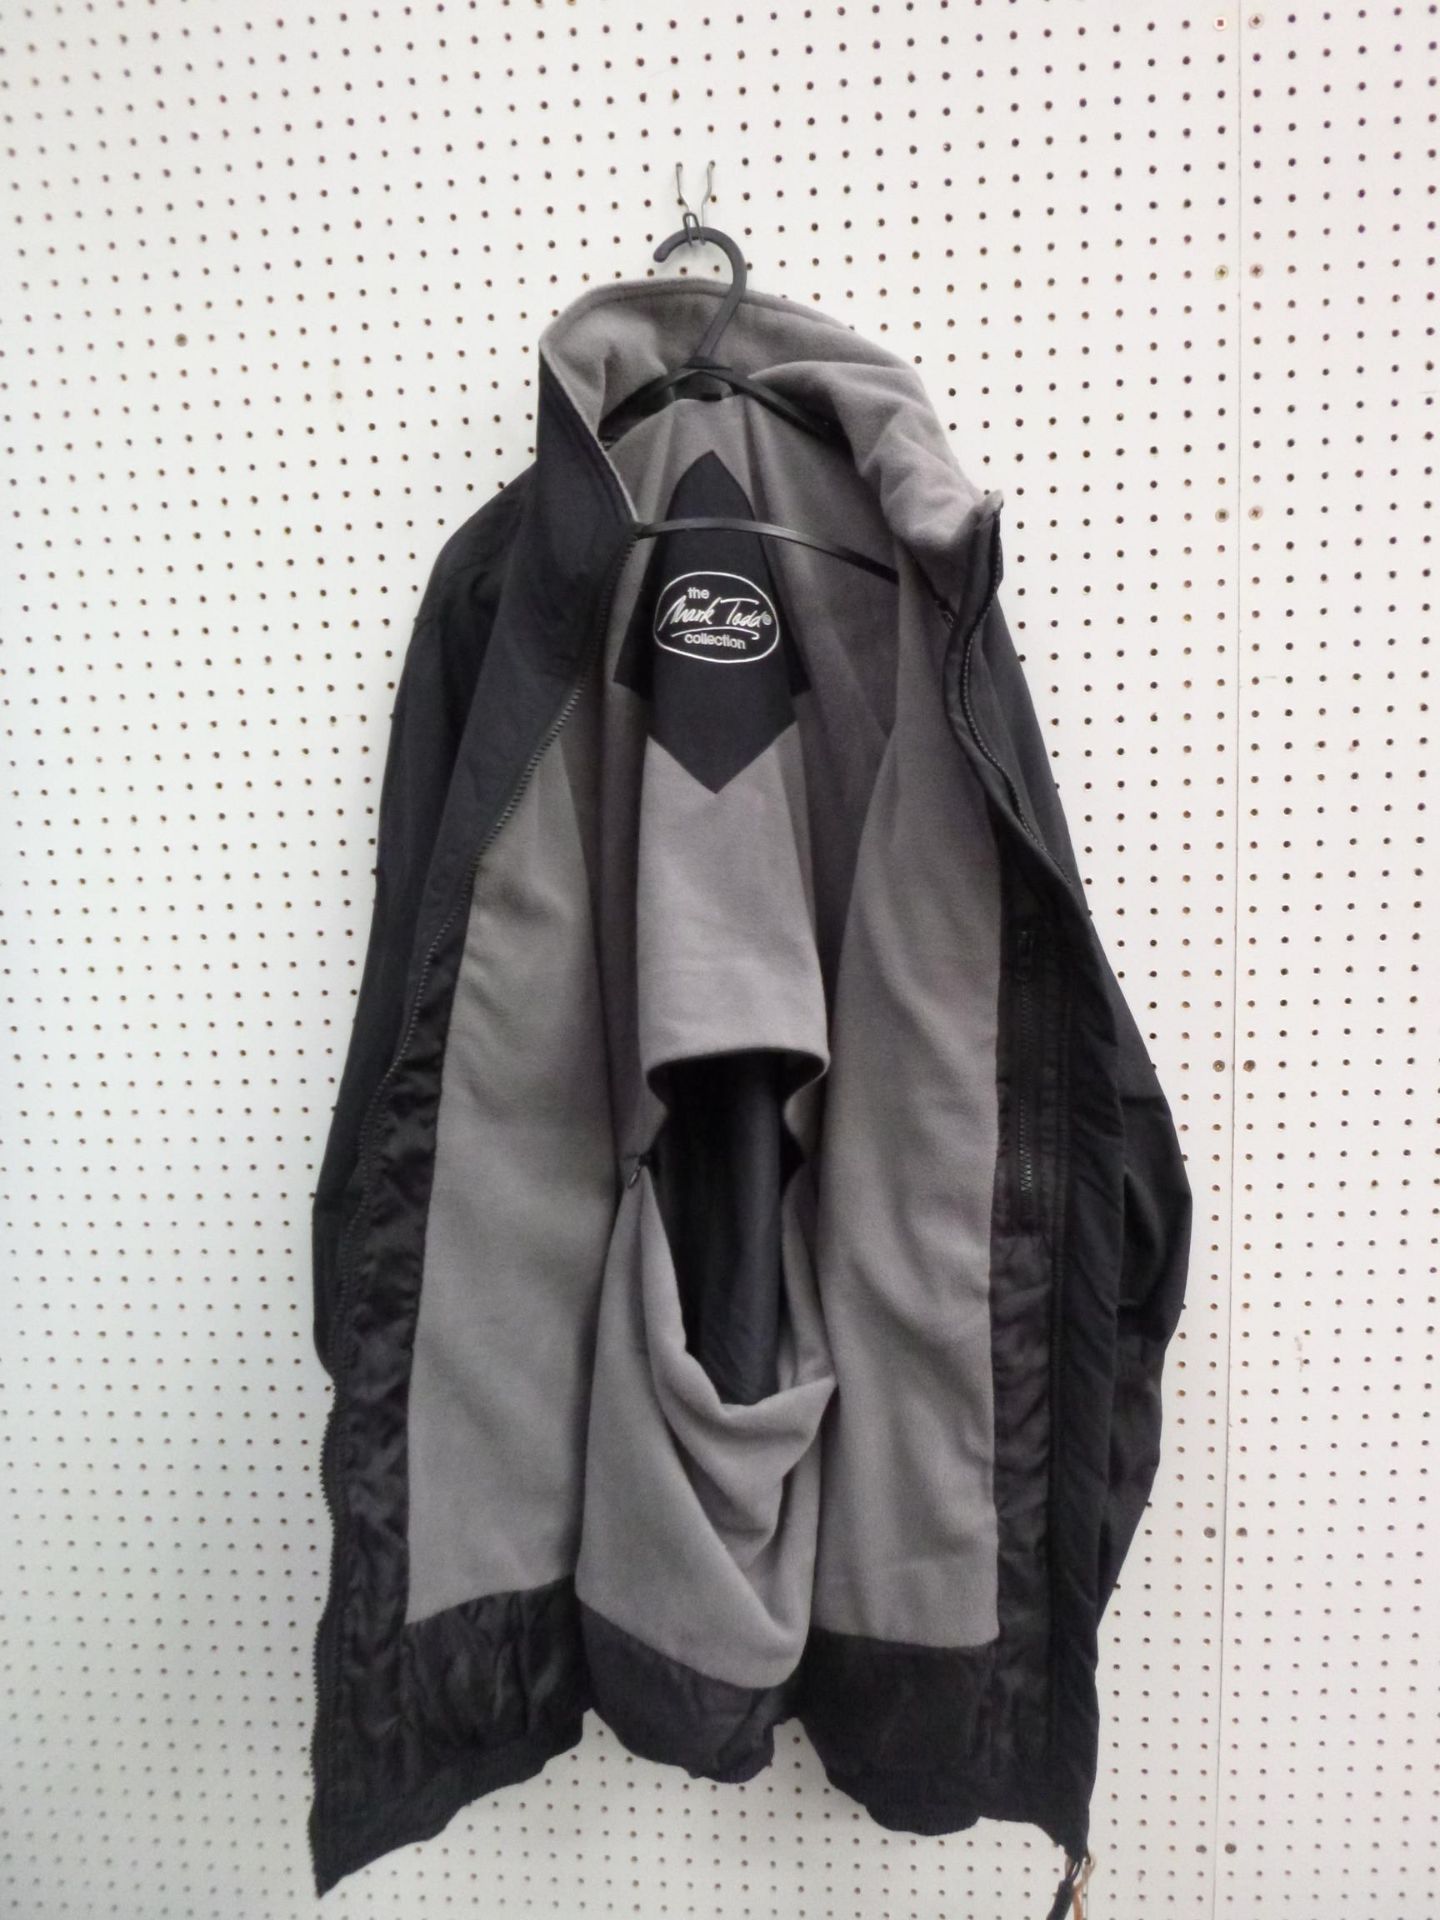 * A New 'Mark Todd' Fleece Lined Blouson Jacket in Black/Grey Size X-Large RRP £47.99 - Bild 2 aus 3